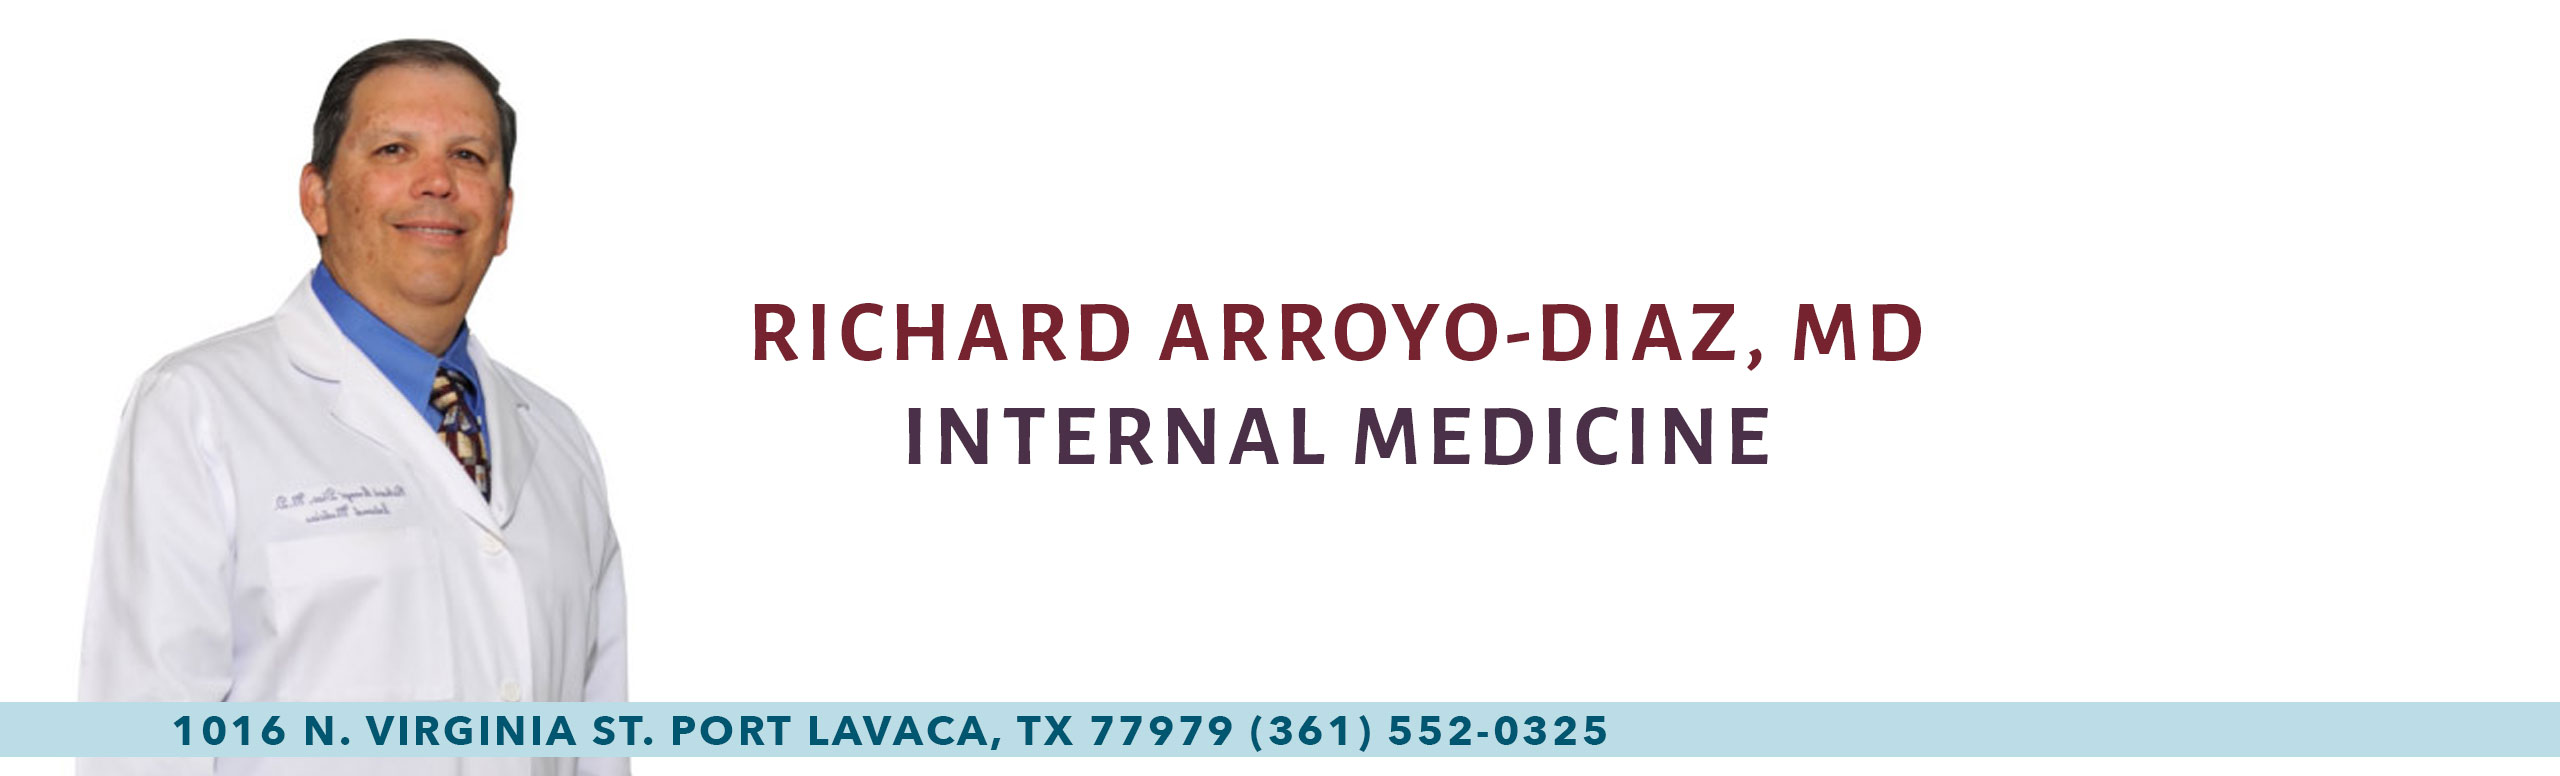 Richard Arroyo-Diaz, MD
Internal Medicine